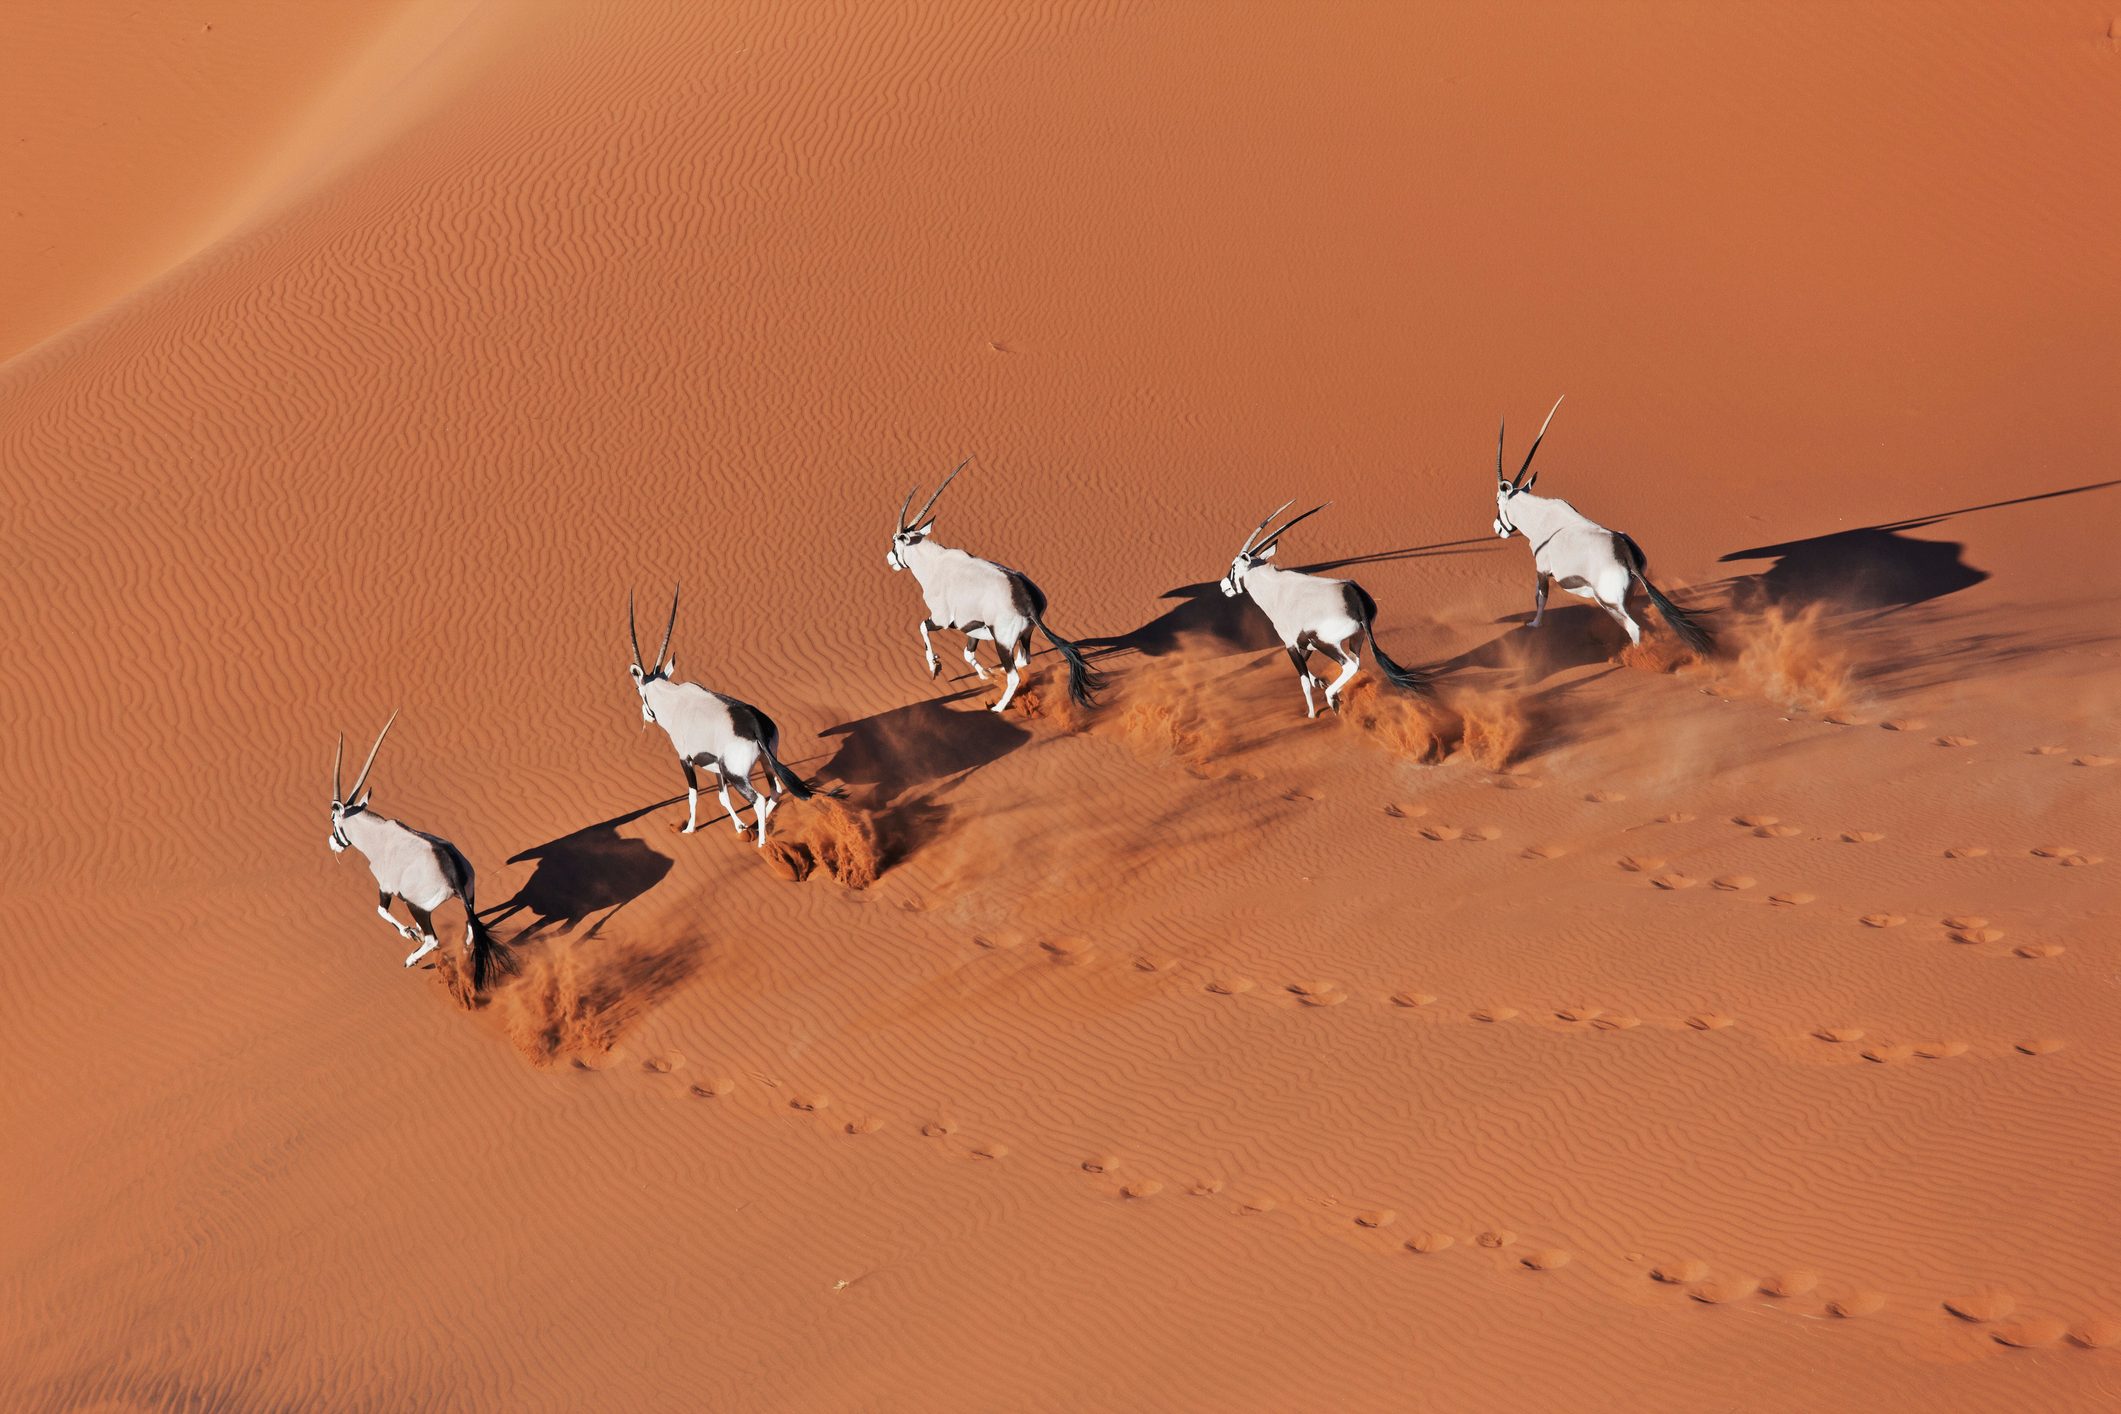 Gemsboks running over sand dune